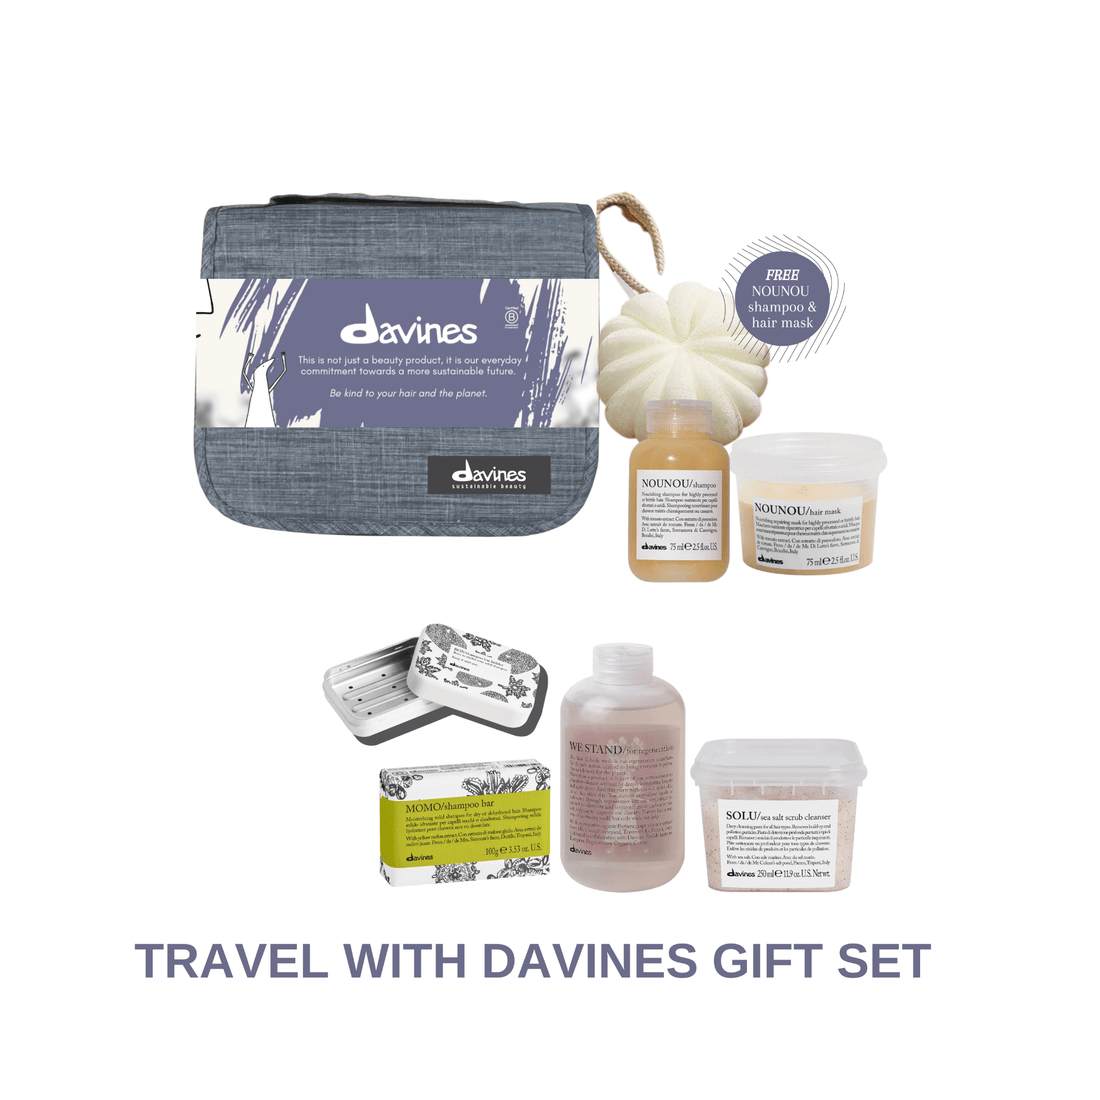 Davines WE STAND SOLU MOMO Travel with Davines Gift Set - HairMNL